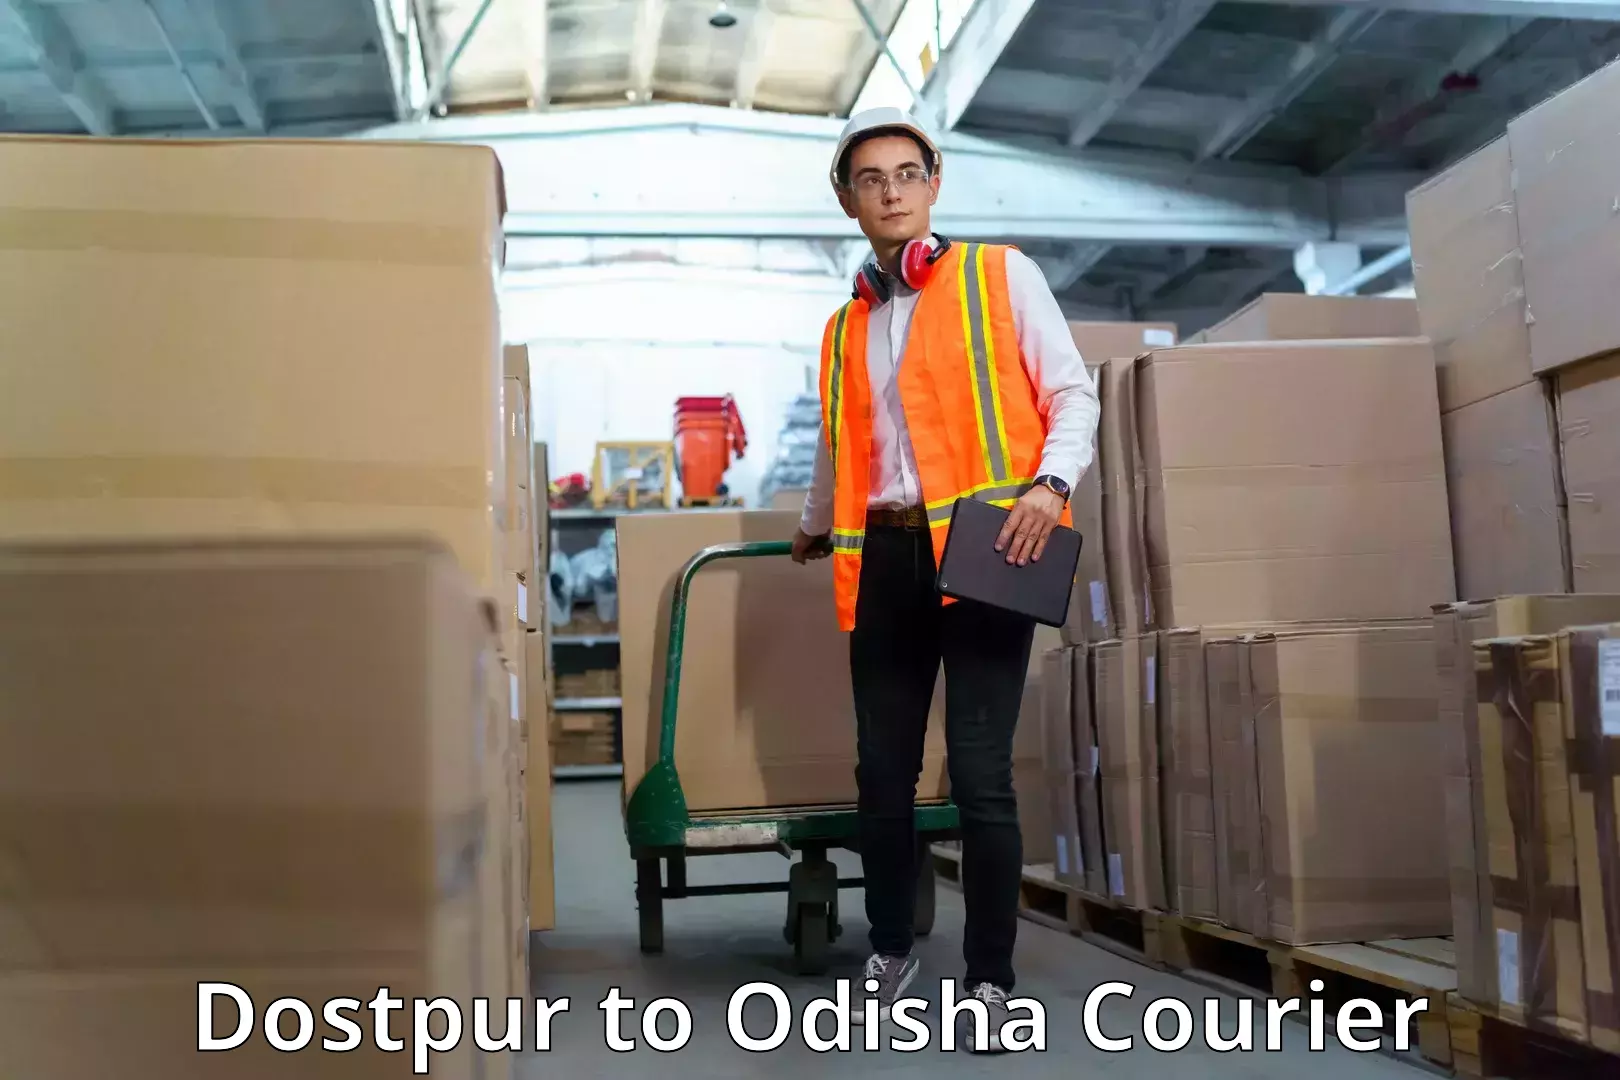 Cargo delivery service Dostpur to Odisha